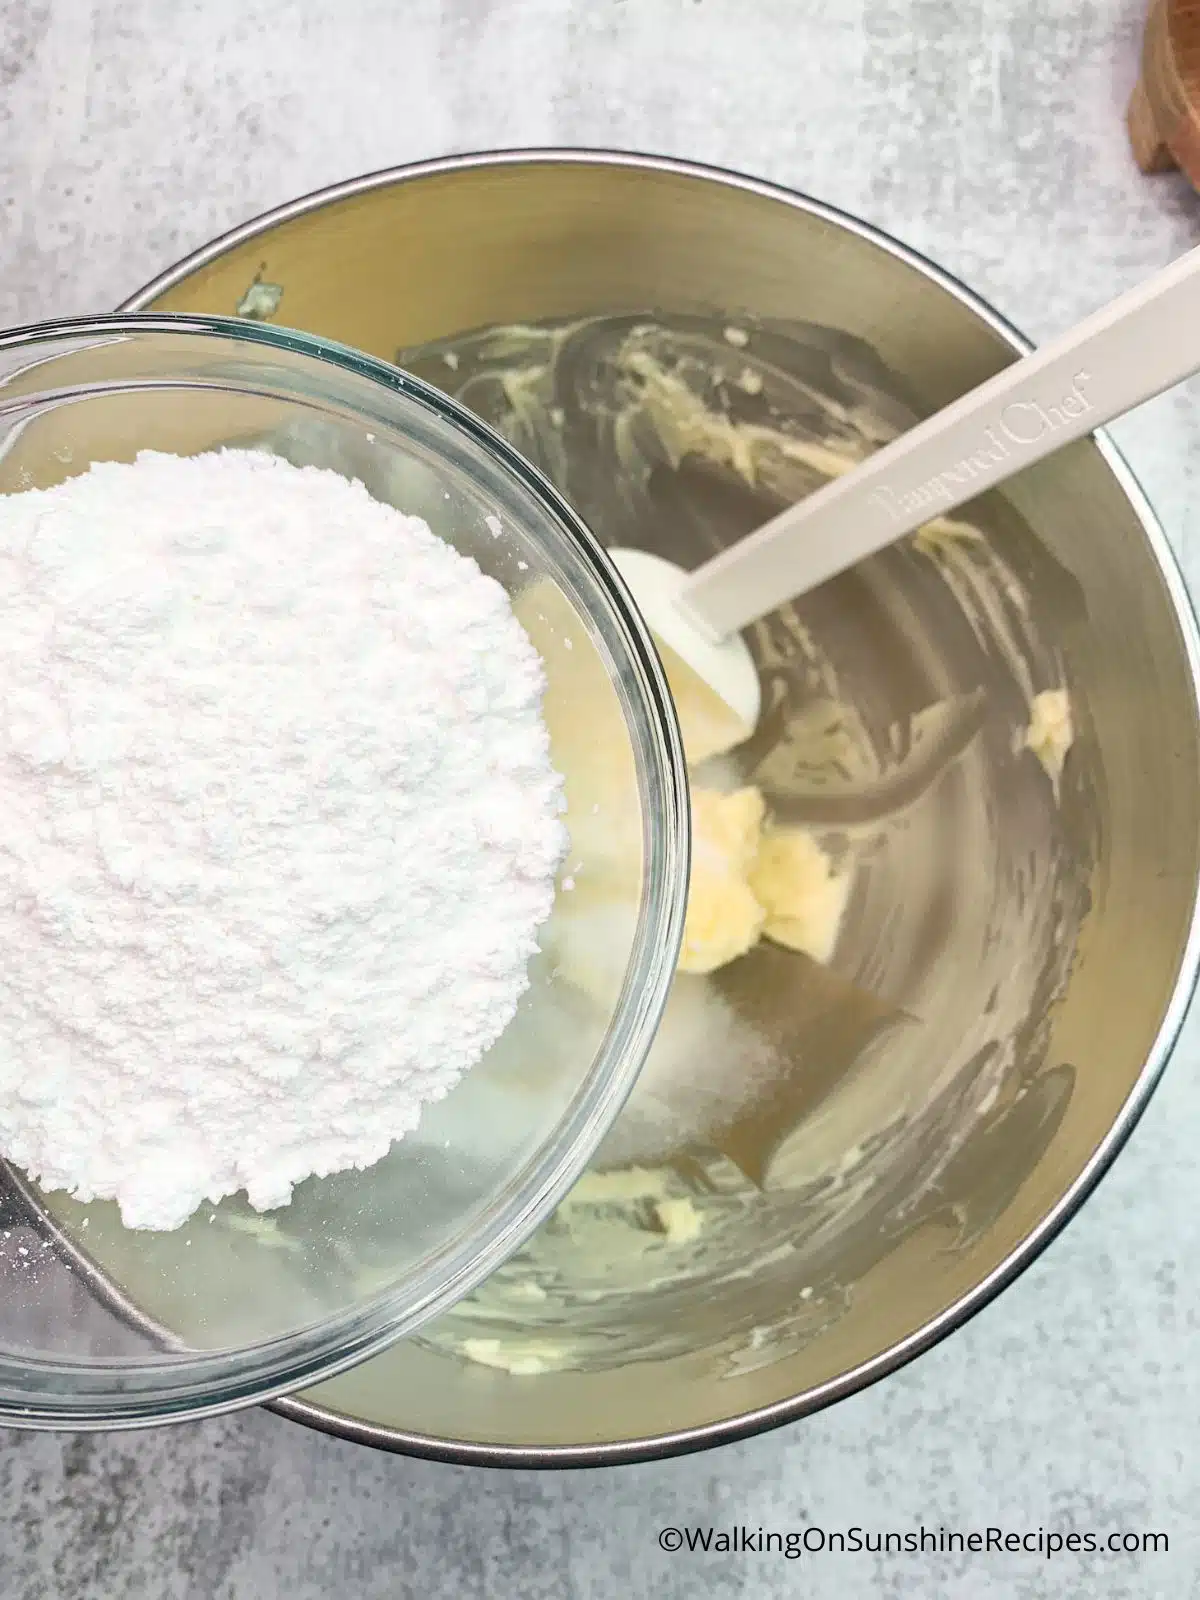 Add powdered sugar to butter.